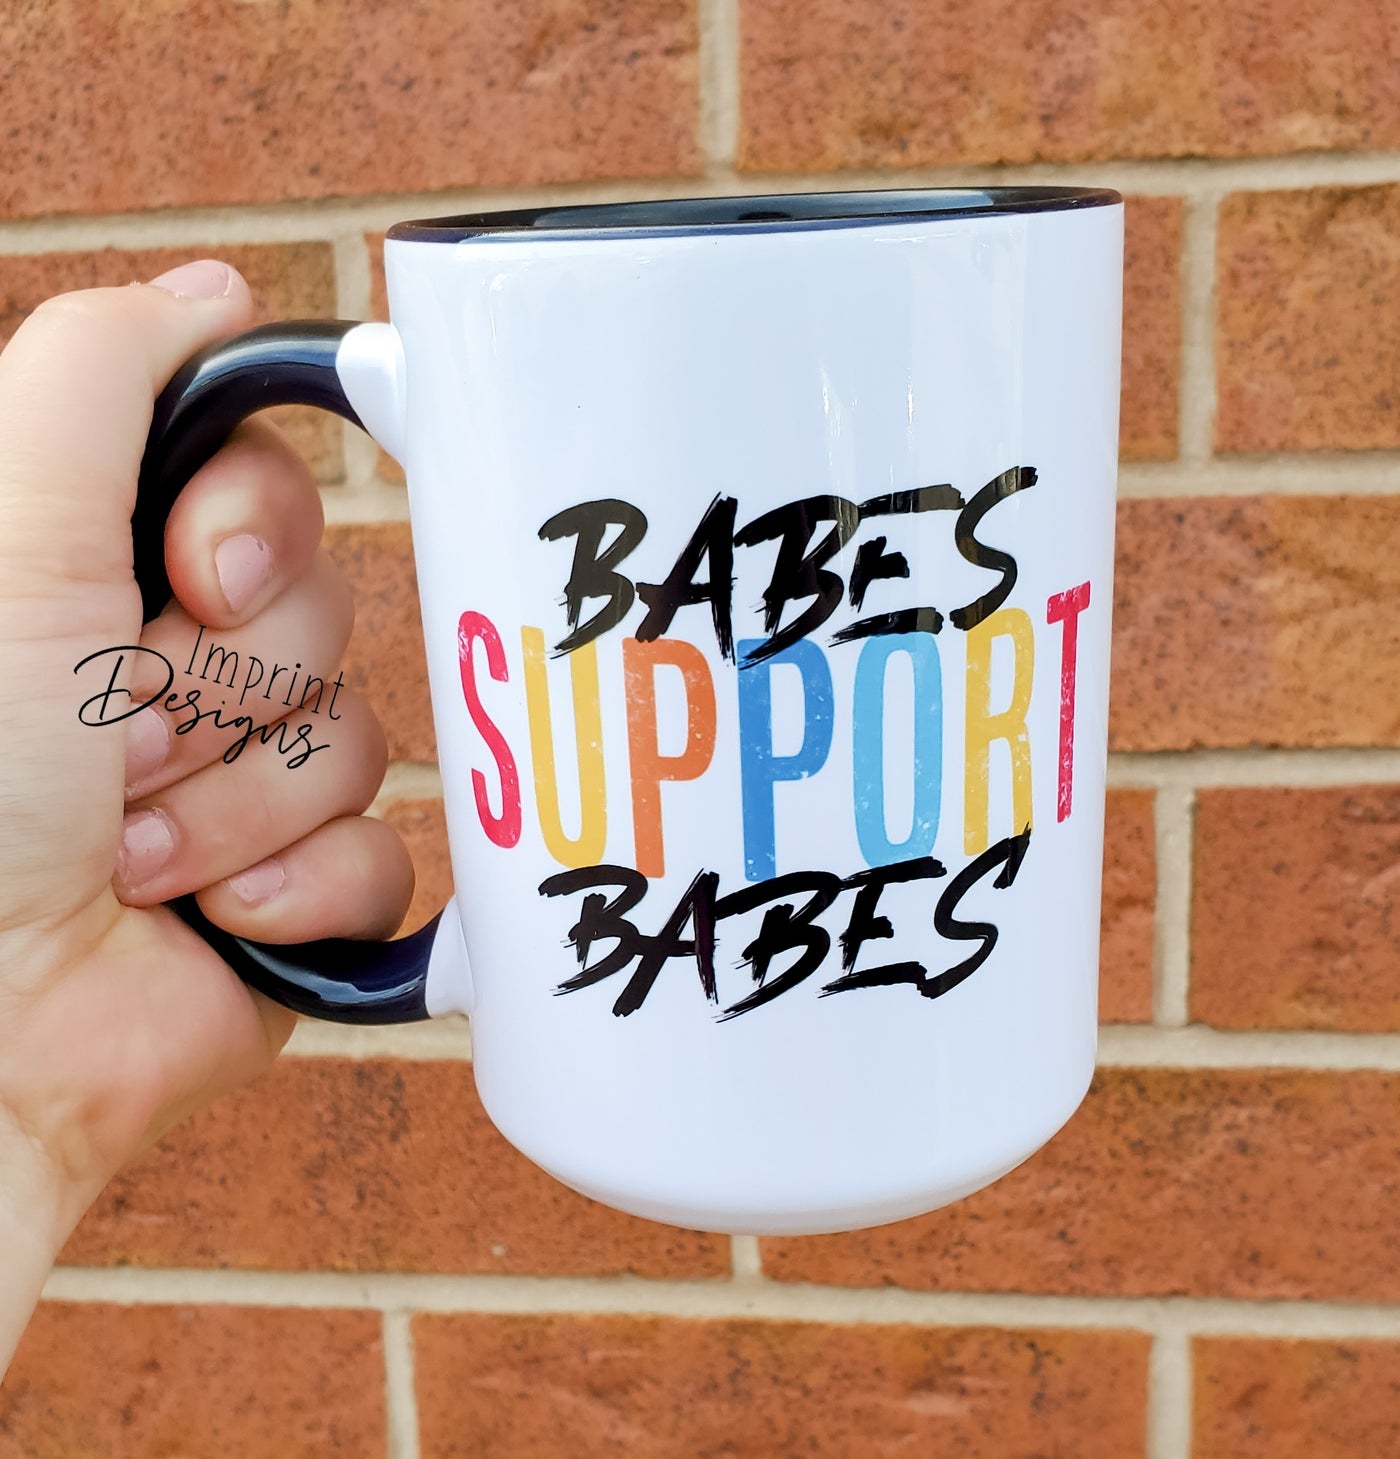 Babes support babess